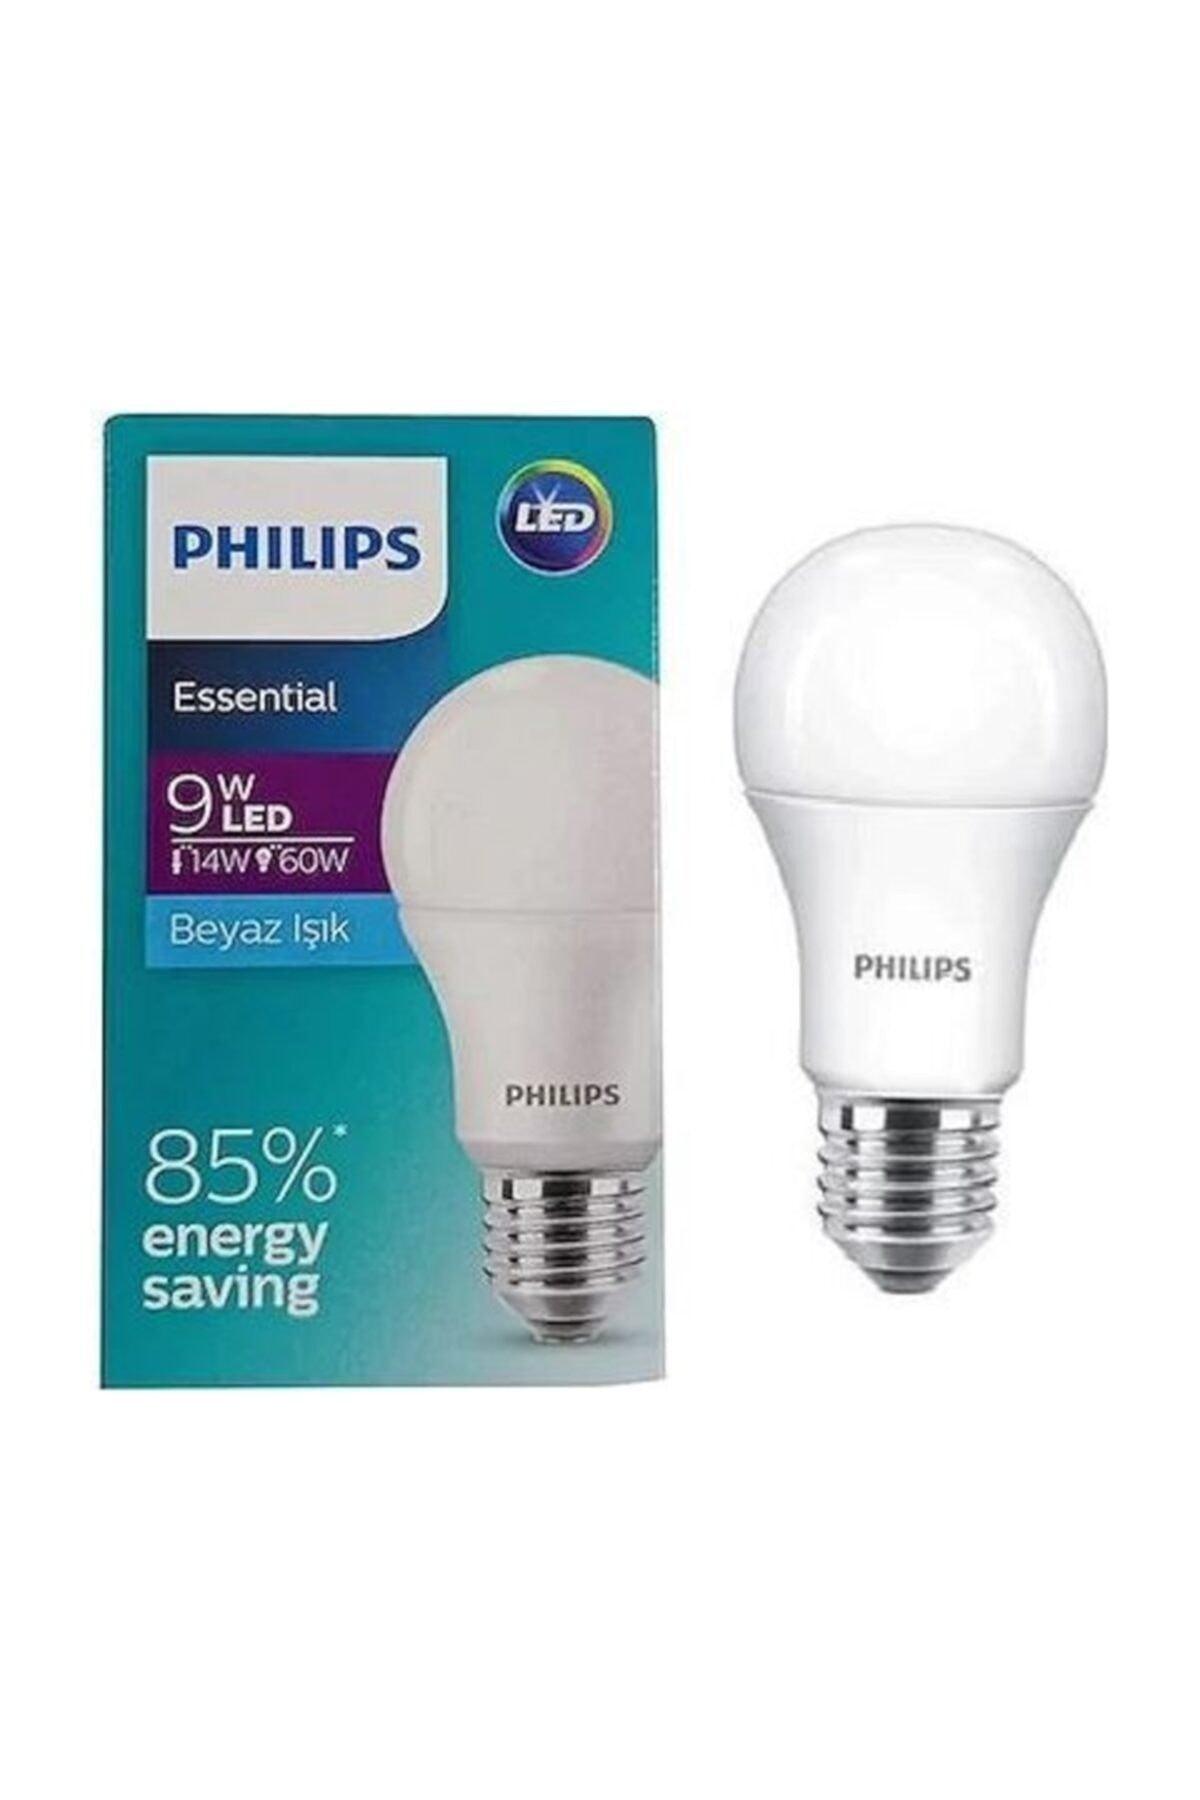 9w Essential Led Bulb E27 White Light with Socket (